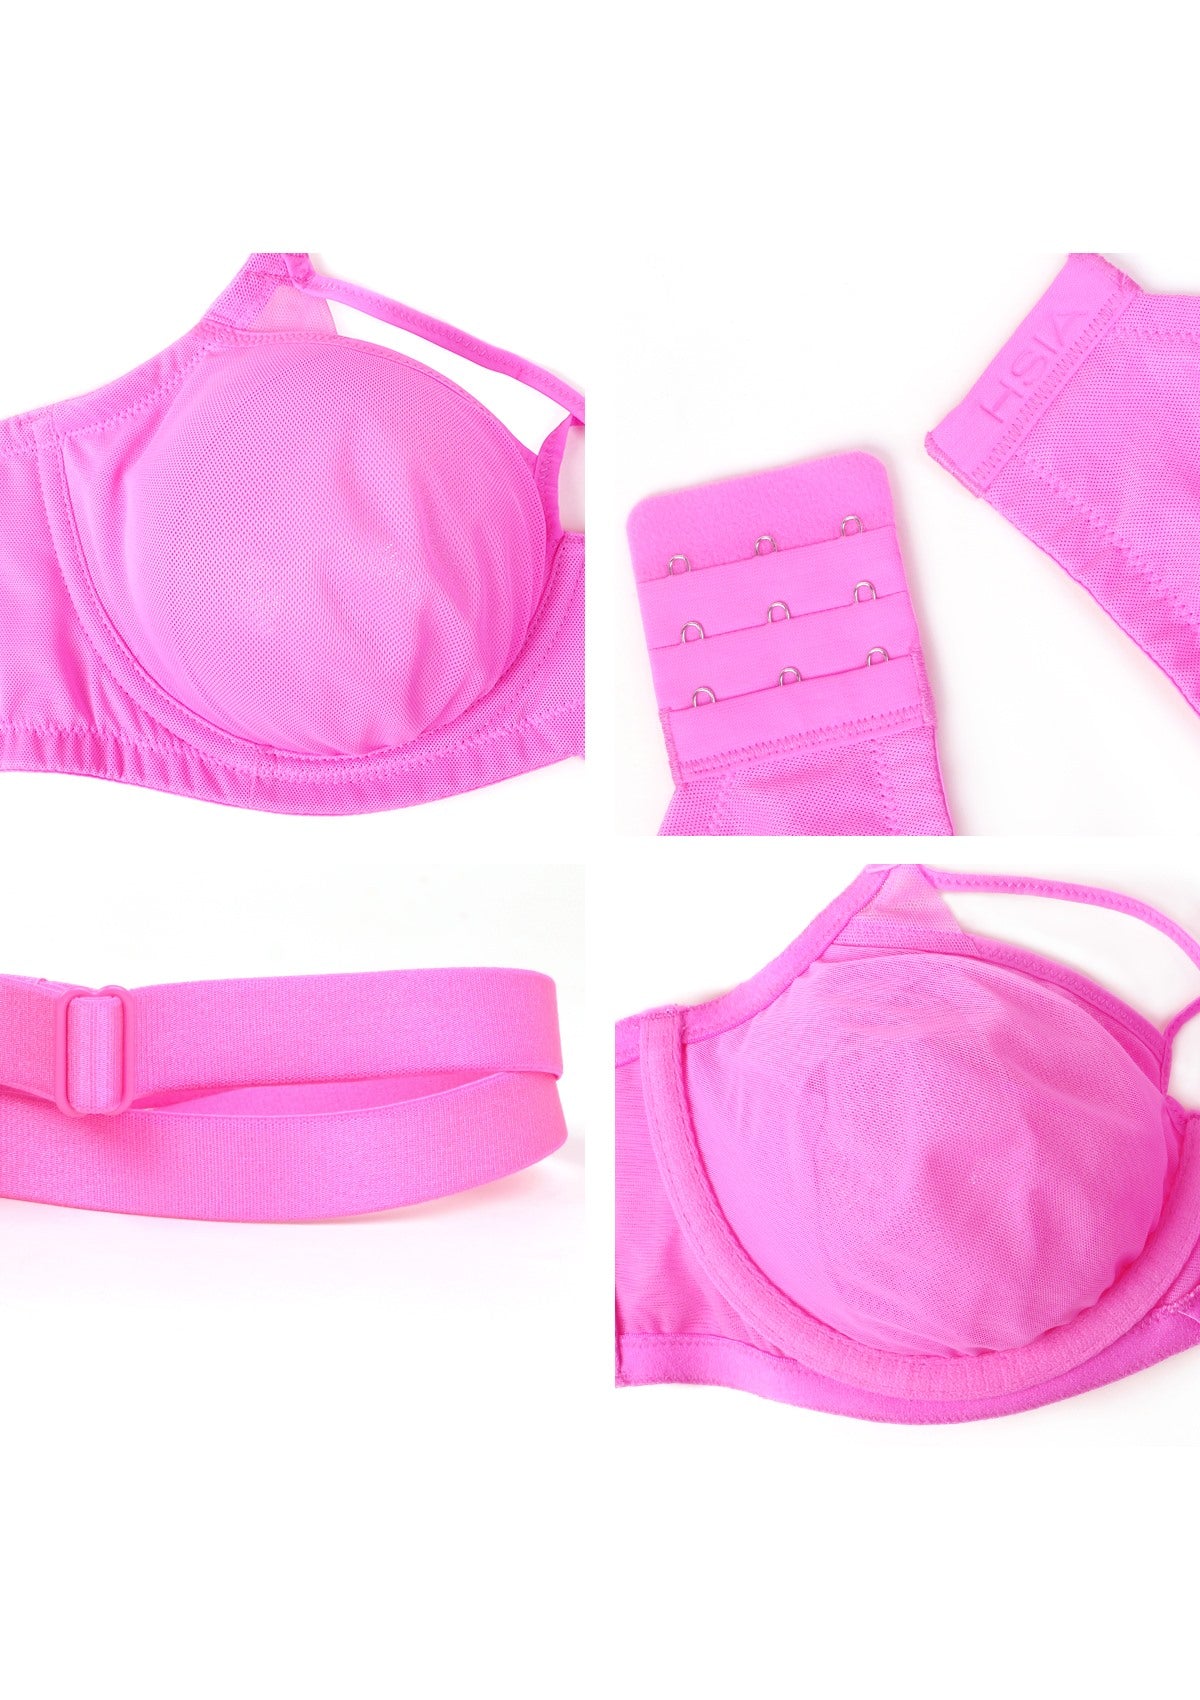 HSIA Billie Cross Front Strap Smooth Sheer Mesh Comfy Underwire Bra - Barbie Pink / 34 / C